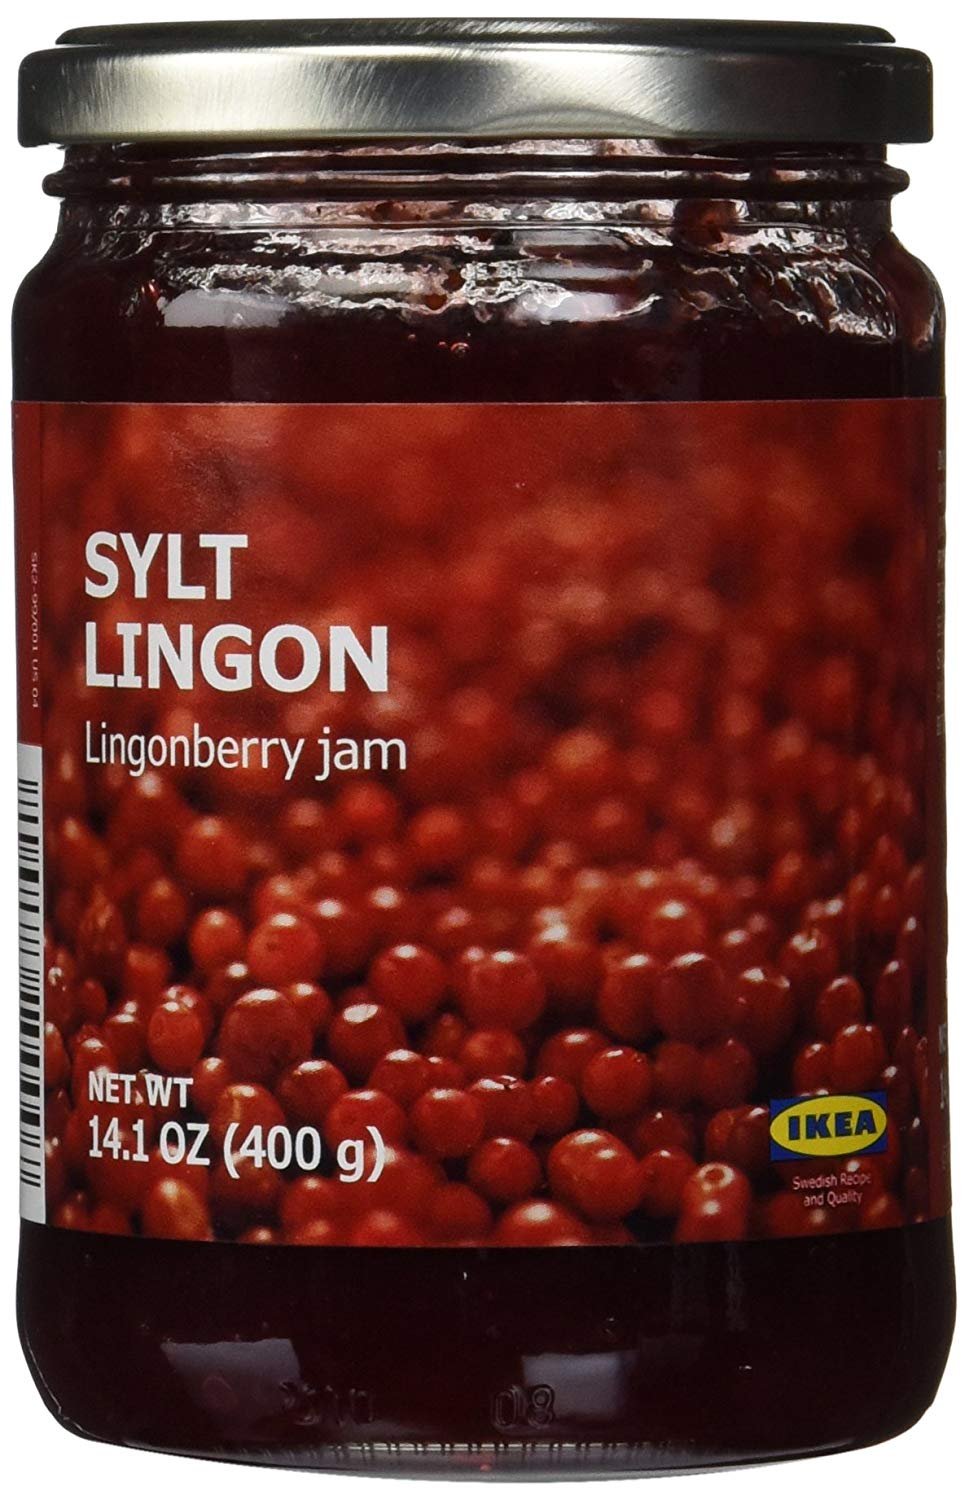 Sylt Lingon Lingonberry Preserves Ikea  Food 14 ounce 